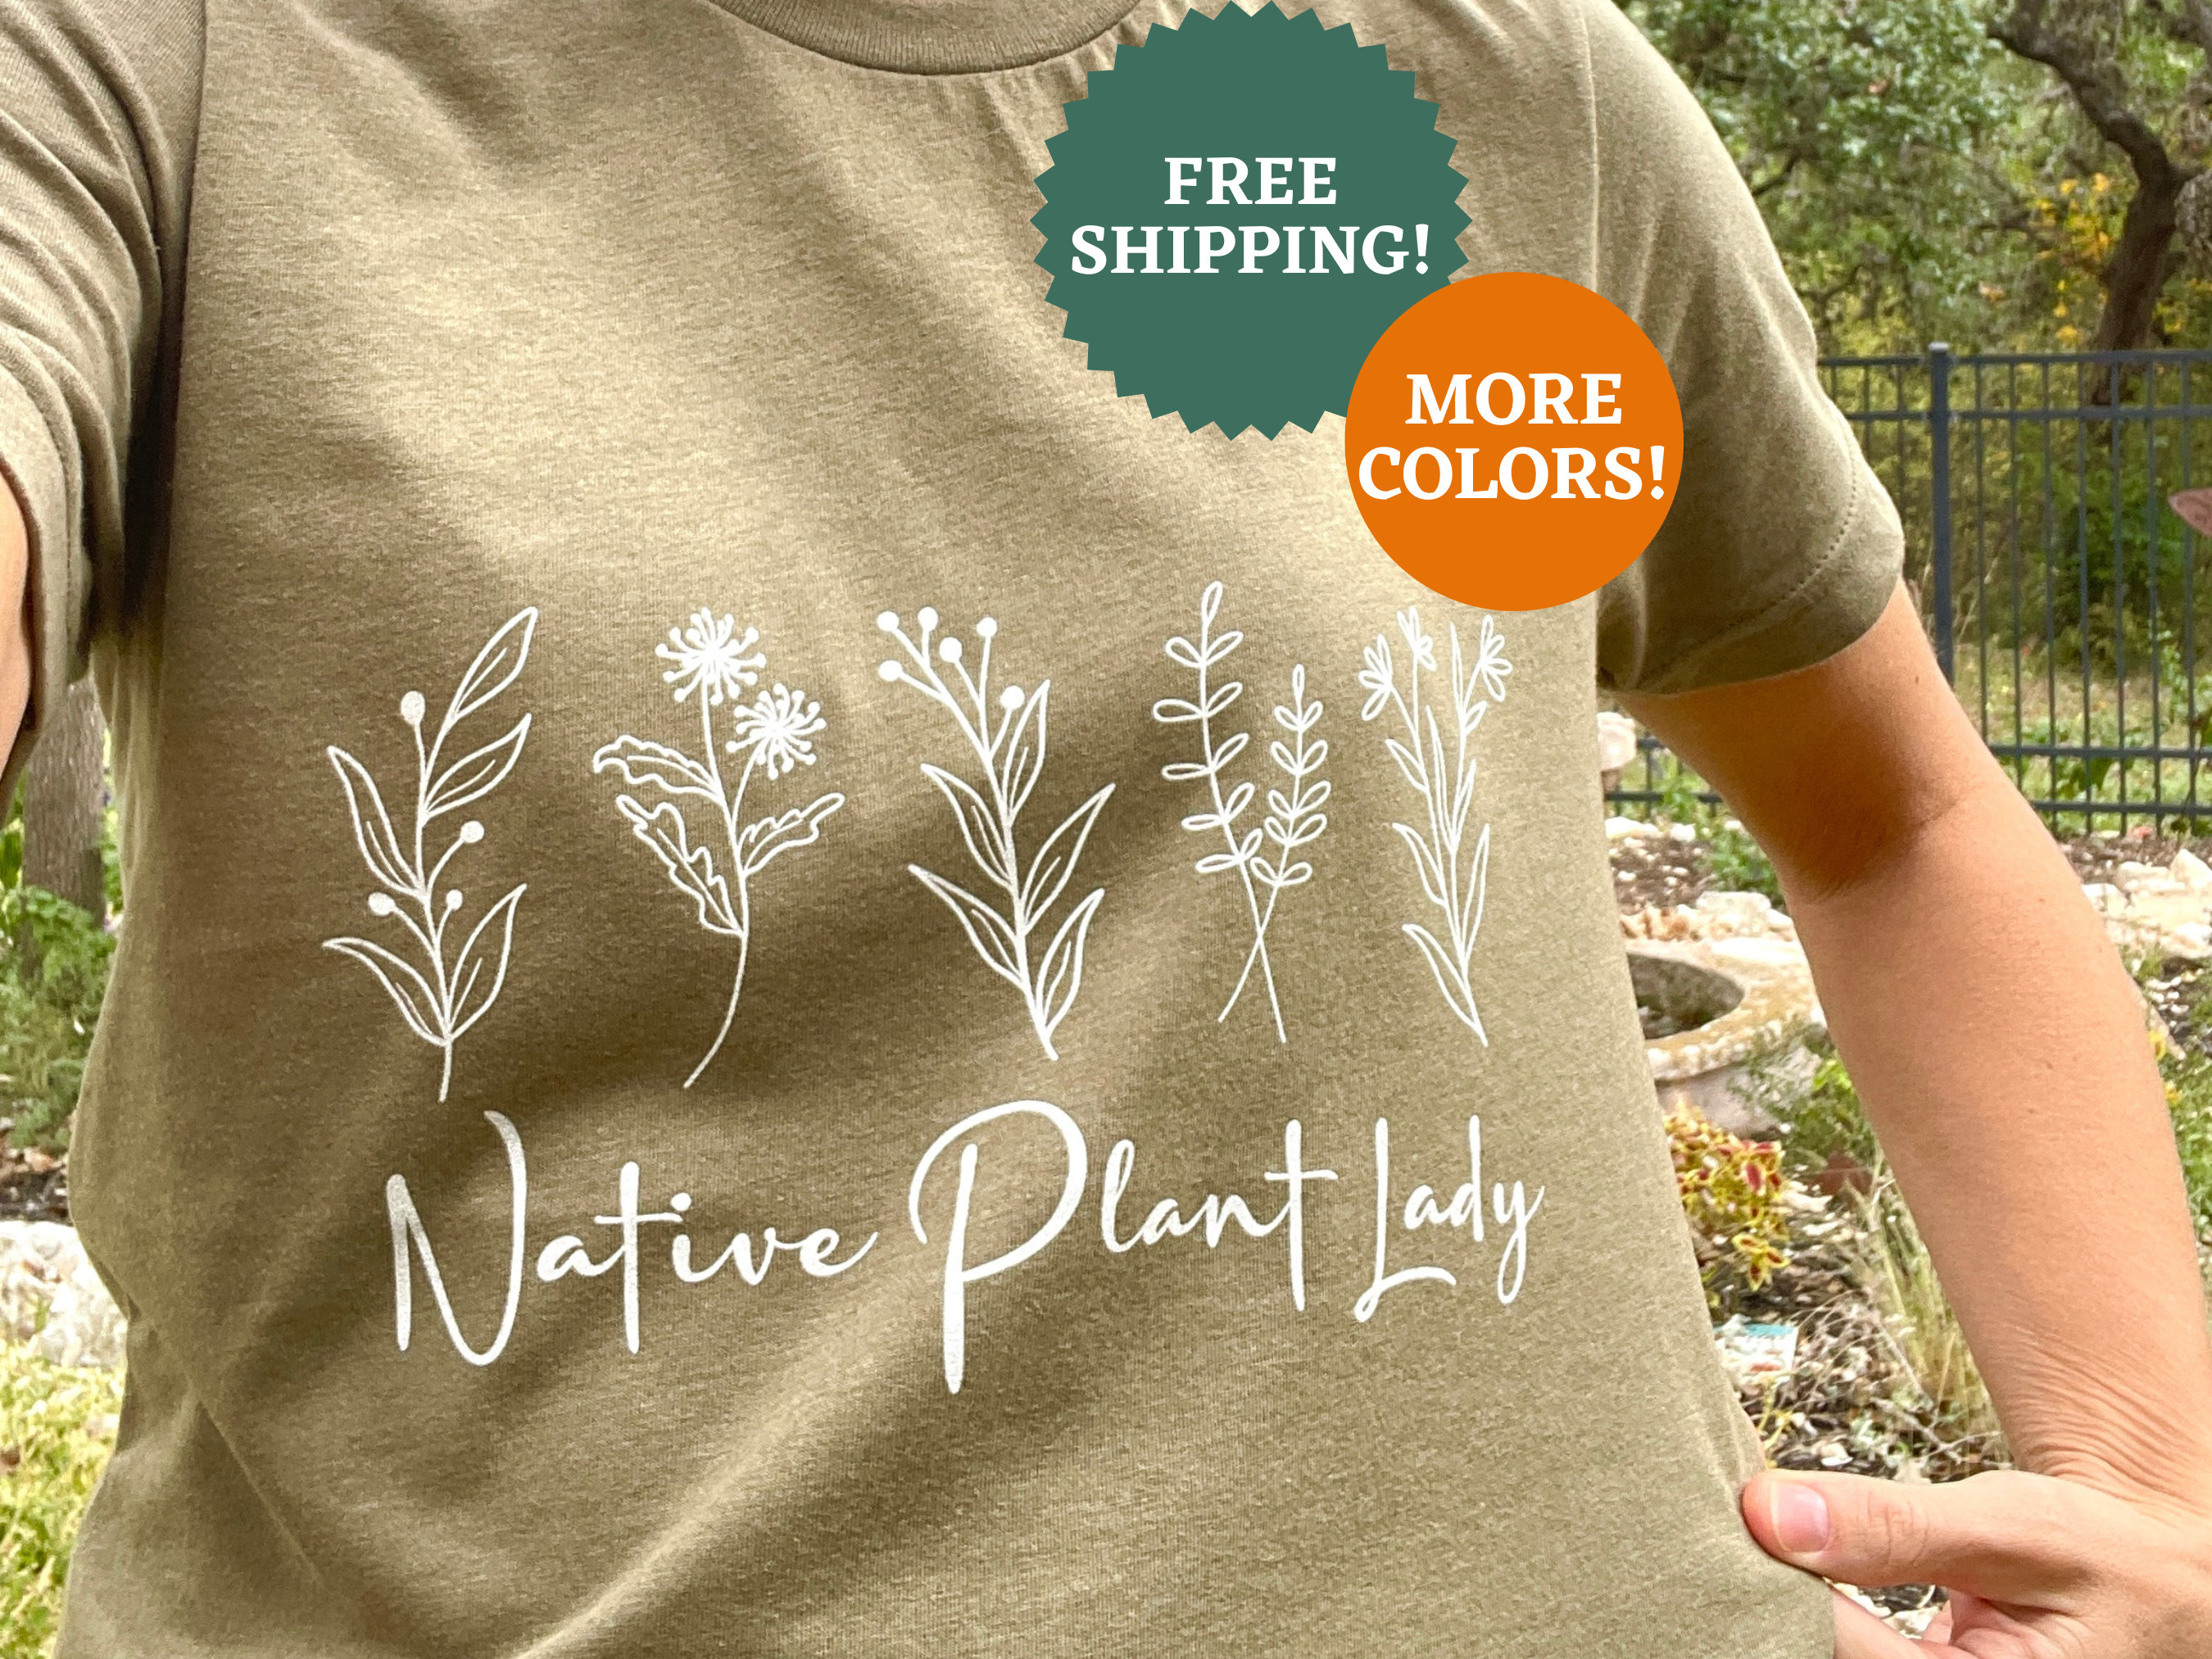 Native Plant Lady Shirt Plant Mom T-shirt Plant Lover Women Gardening Shirt  Native Plants Wildflower Shirt Female Flower Shirt - Etsy